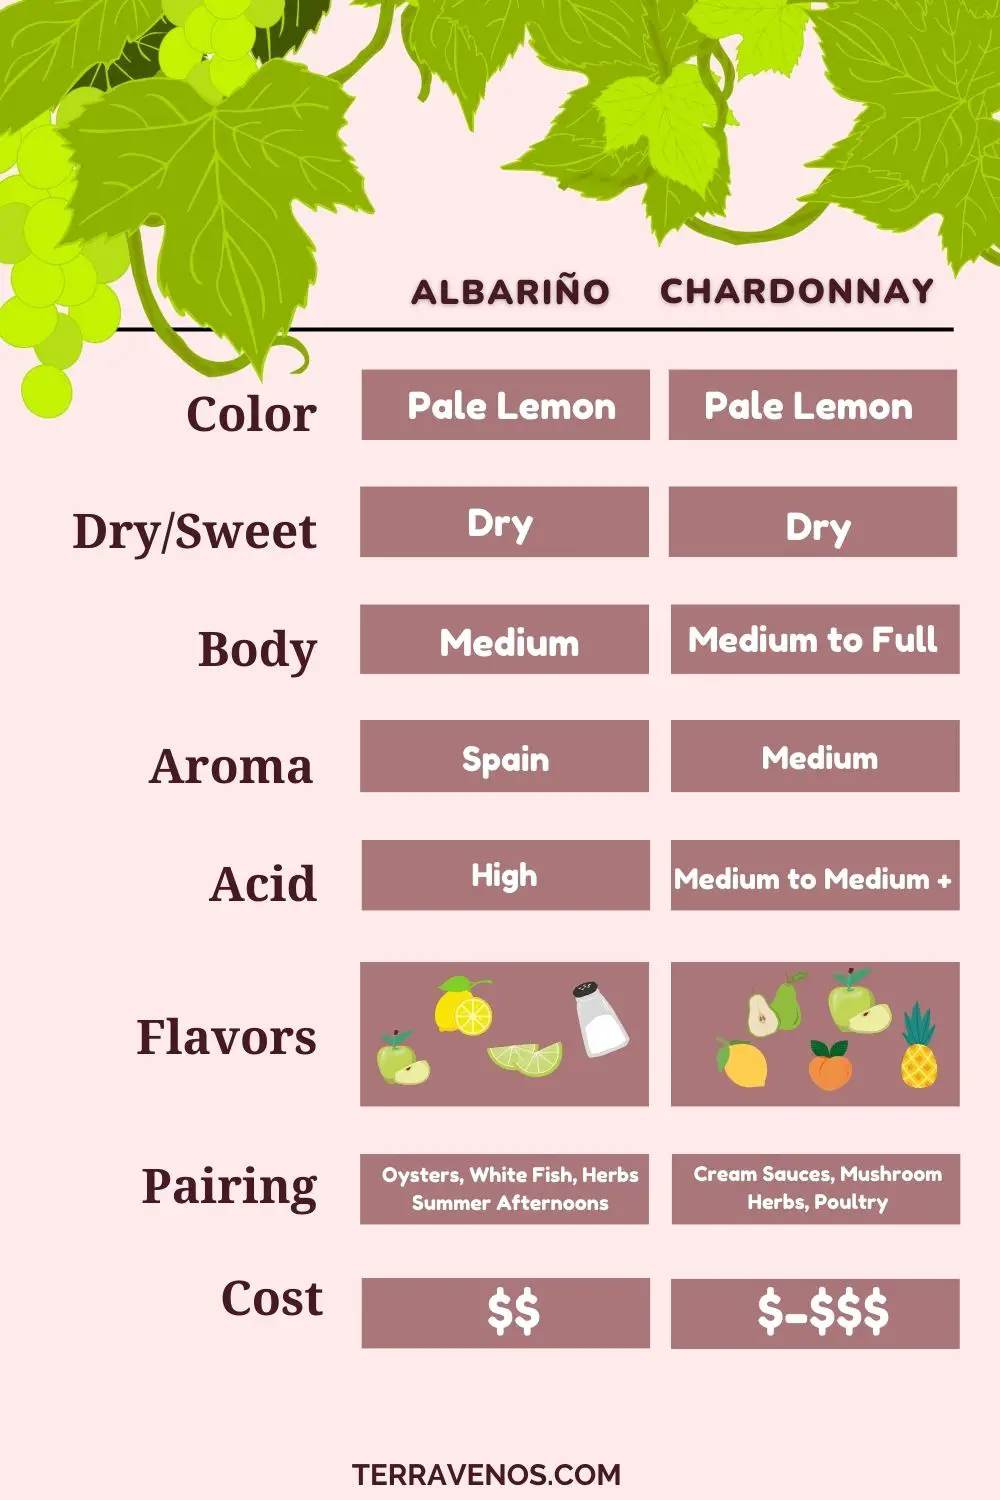 albarino-vs-chardonnay-wine-comparison-infographic